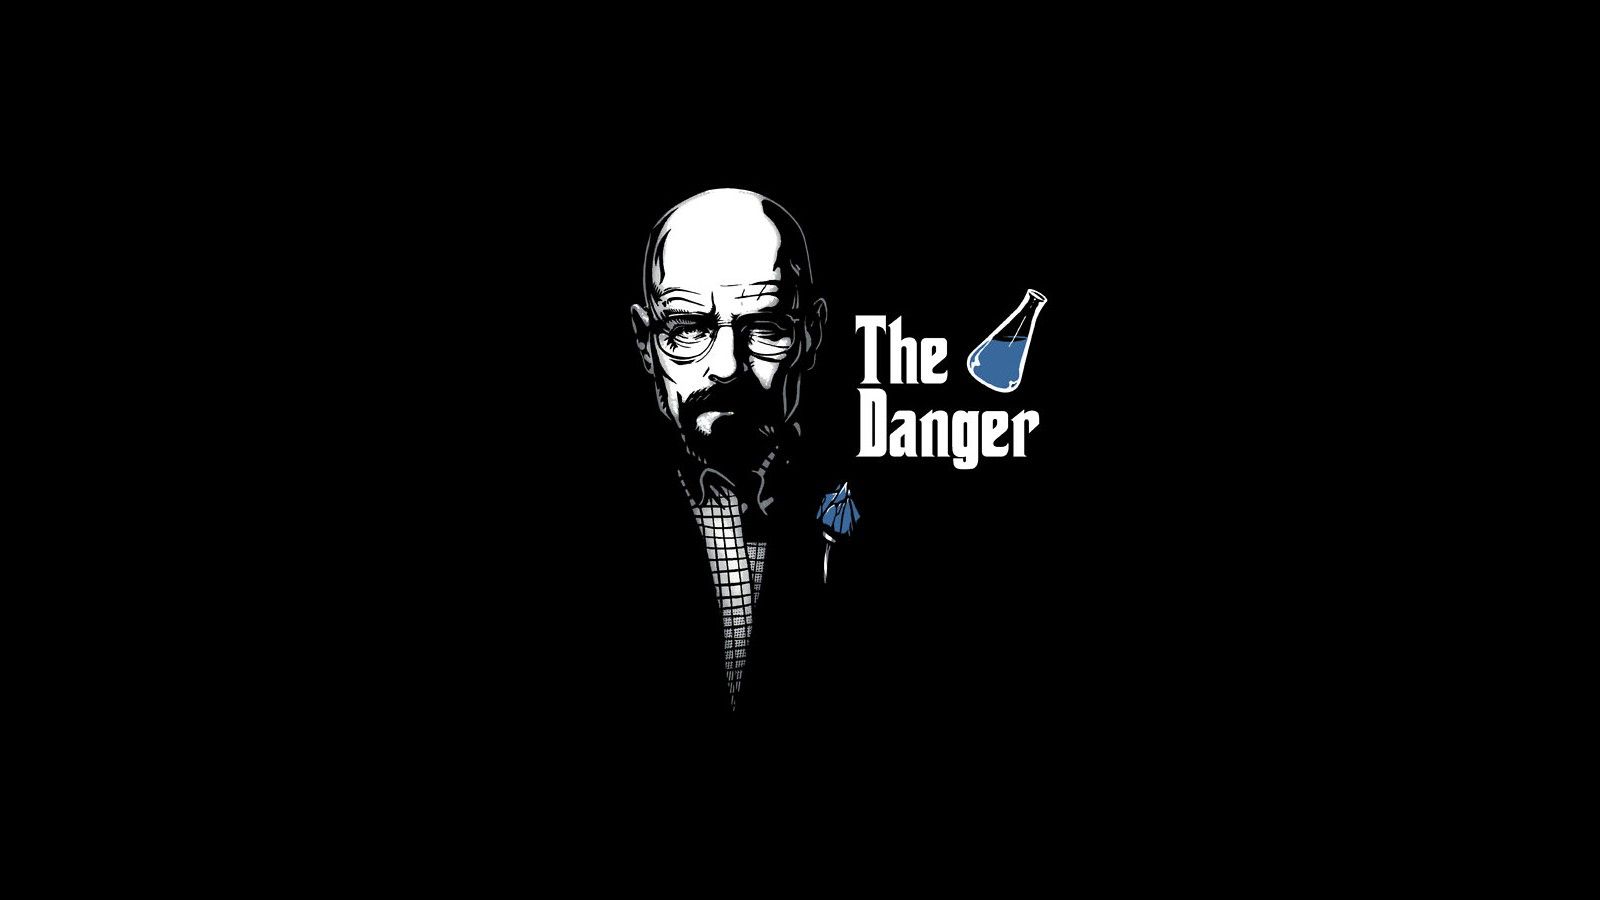 The_Danger___Walter_White___Breaking_Bad.jfif